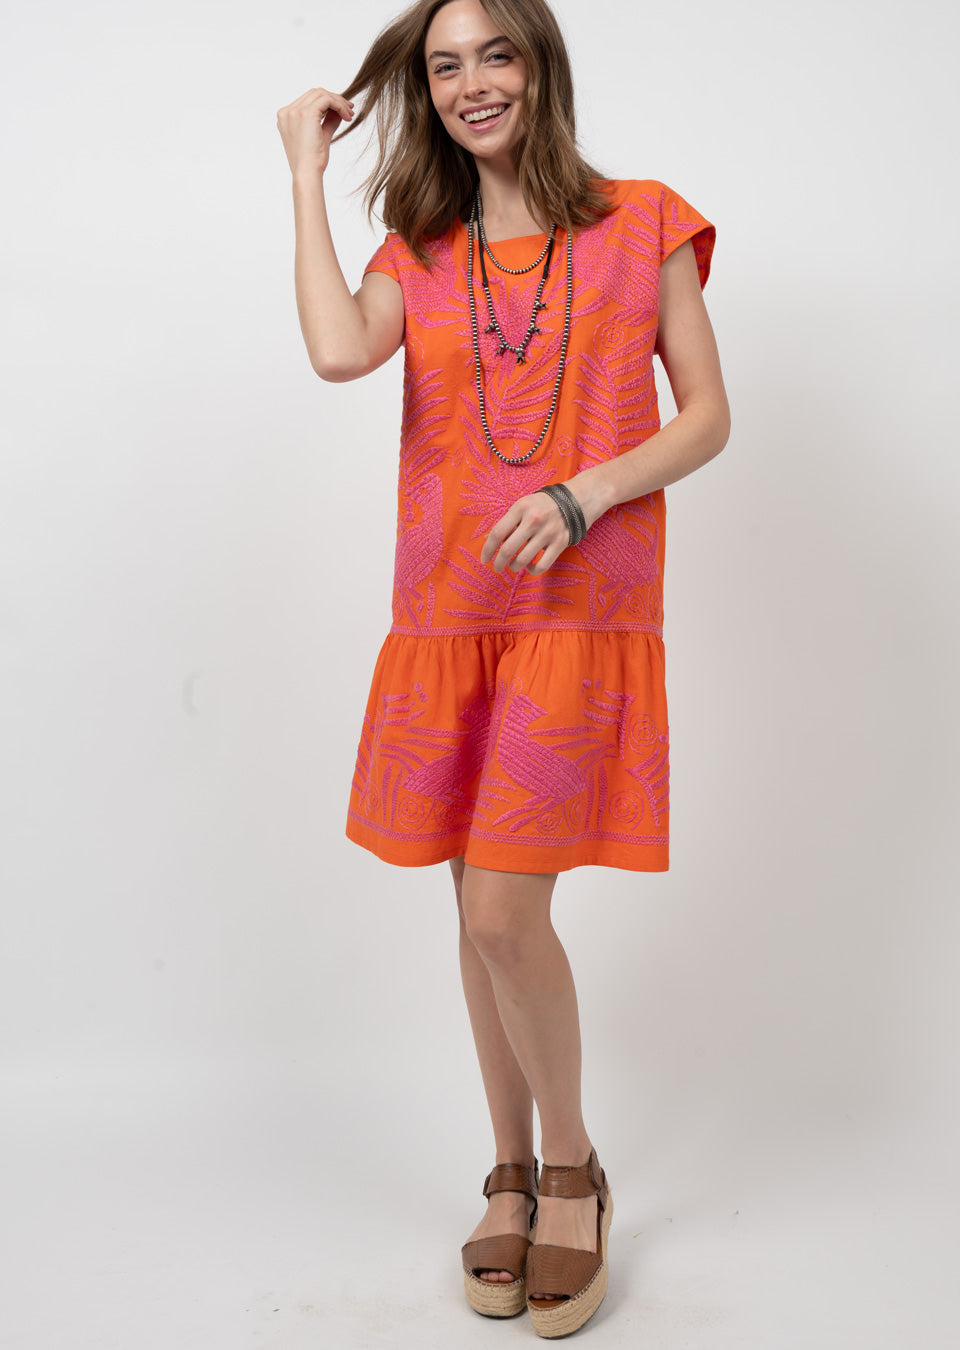 Gaby Tangerine Short Dress Mini Dresses Ivy Jane   